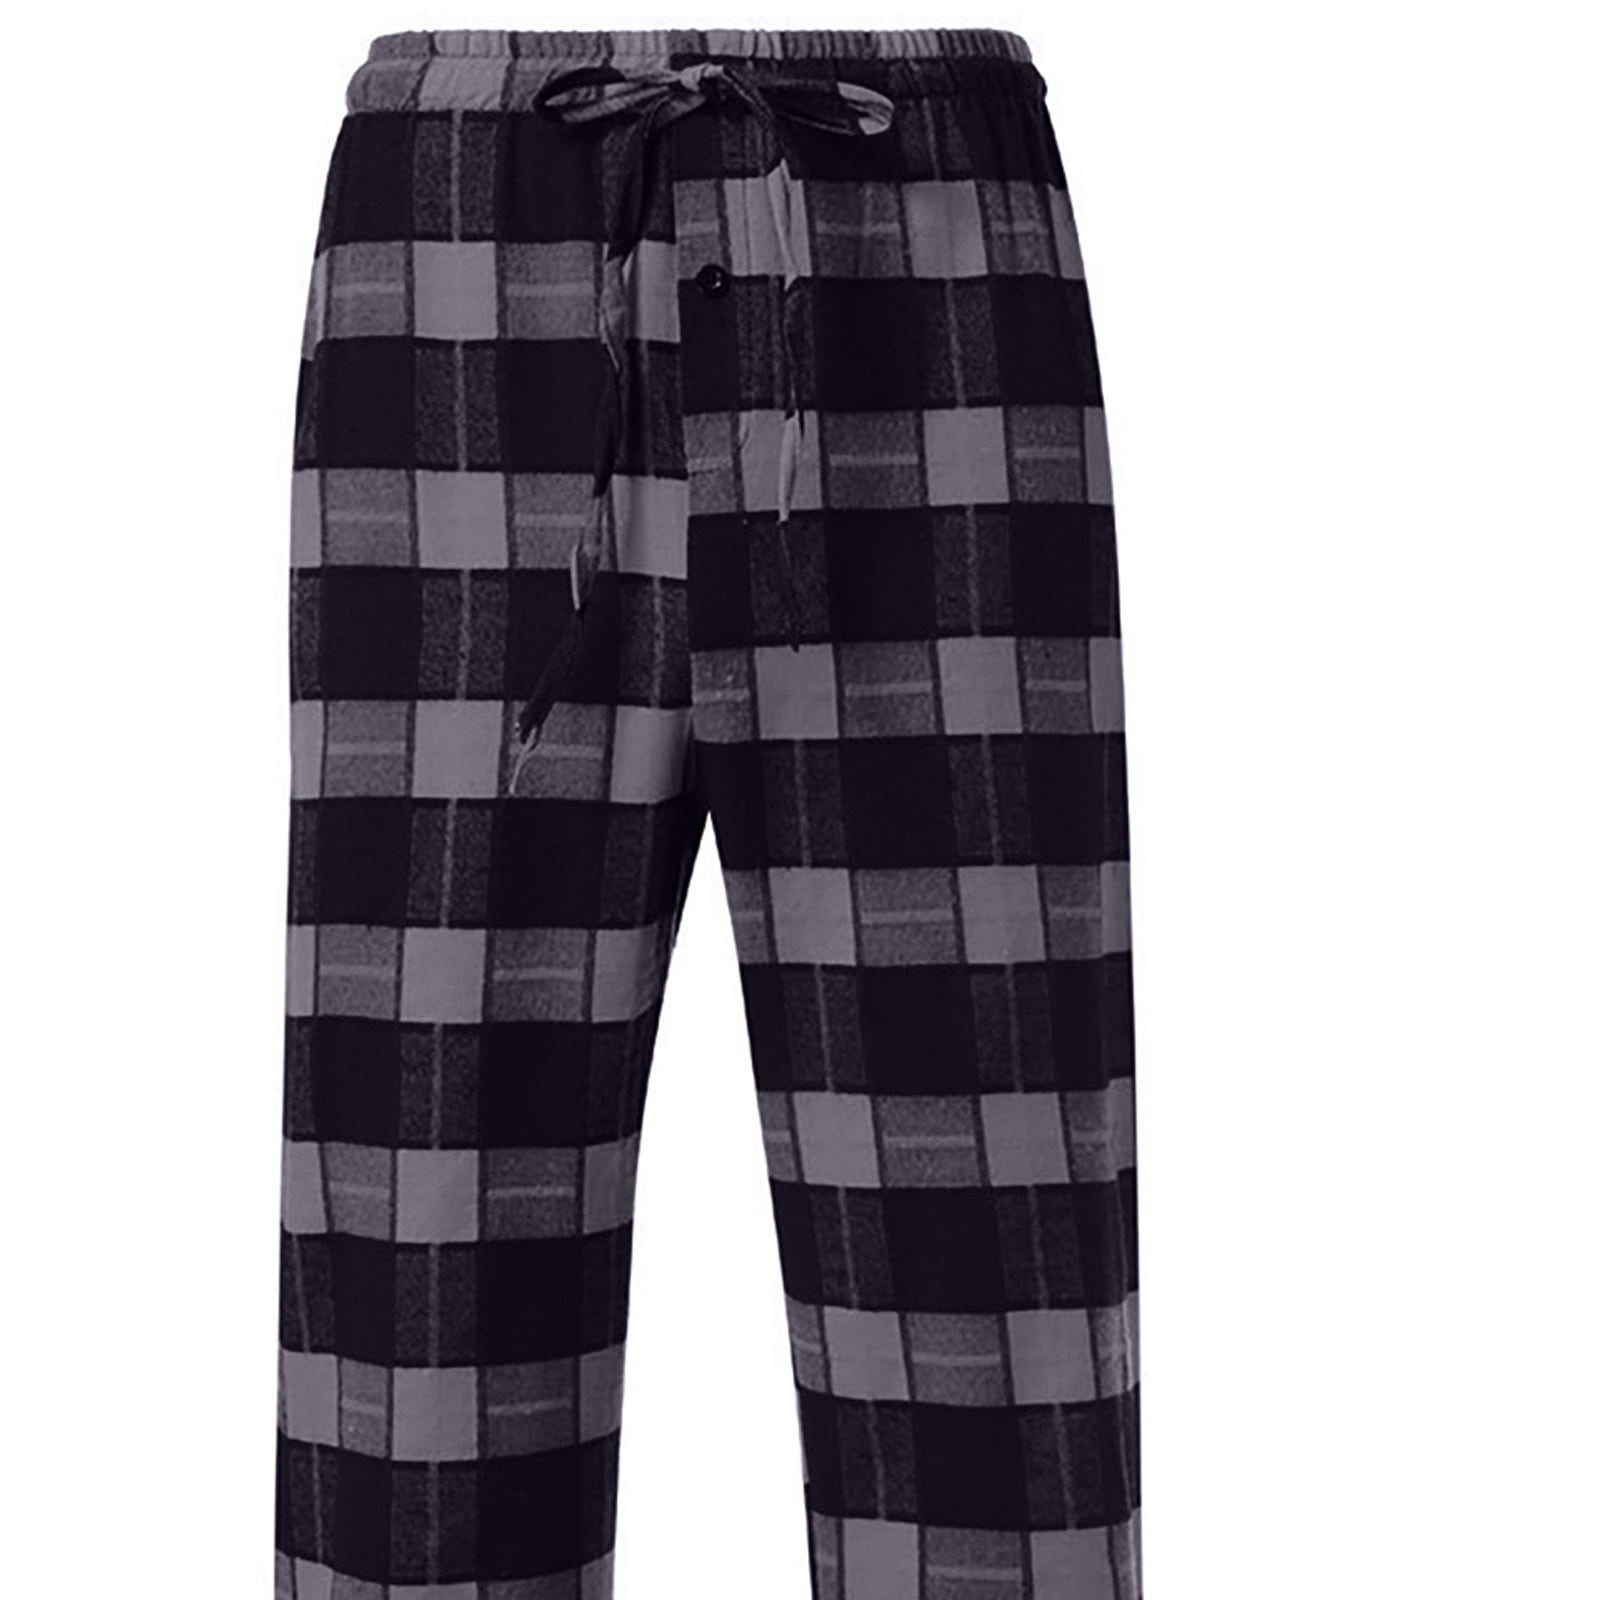 Plaid Pajama Pants Under 5 Dollar Items Packers Gifts for Men Mens Zip up  Hoodies Black Dress Clearance Items Under 10 Dollars Funny Tshirts Shirts  for Men Men